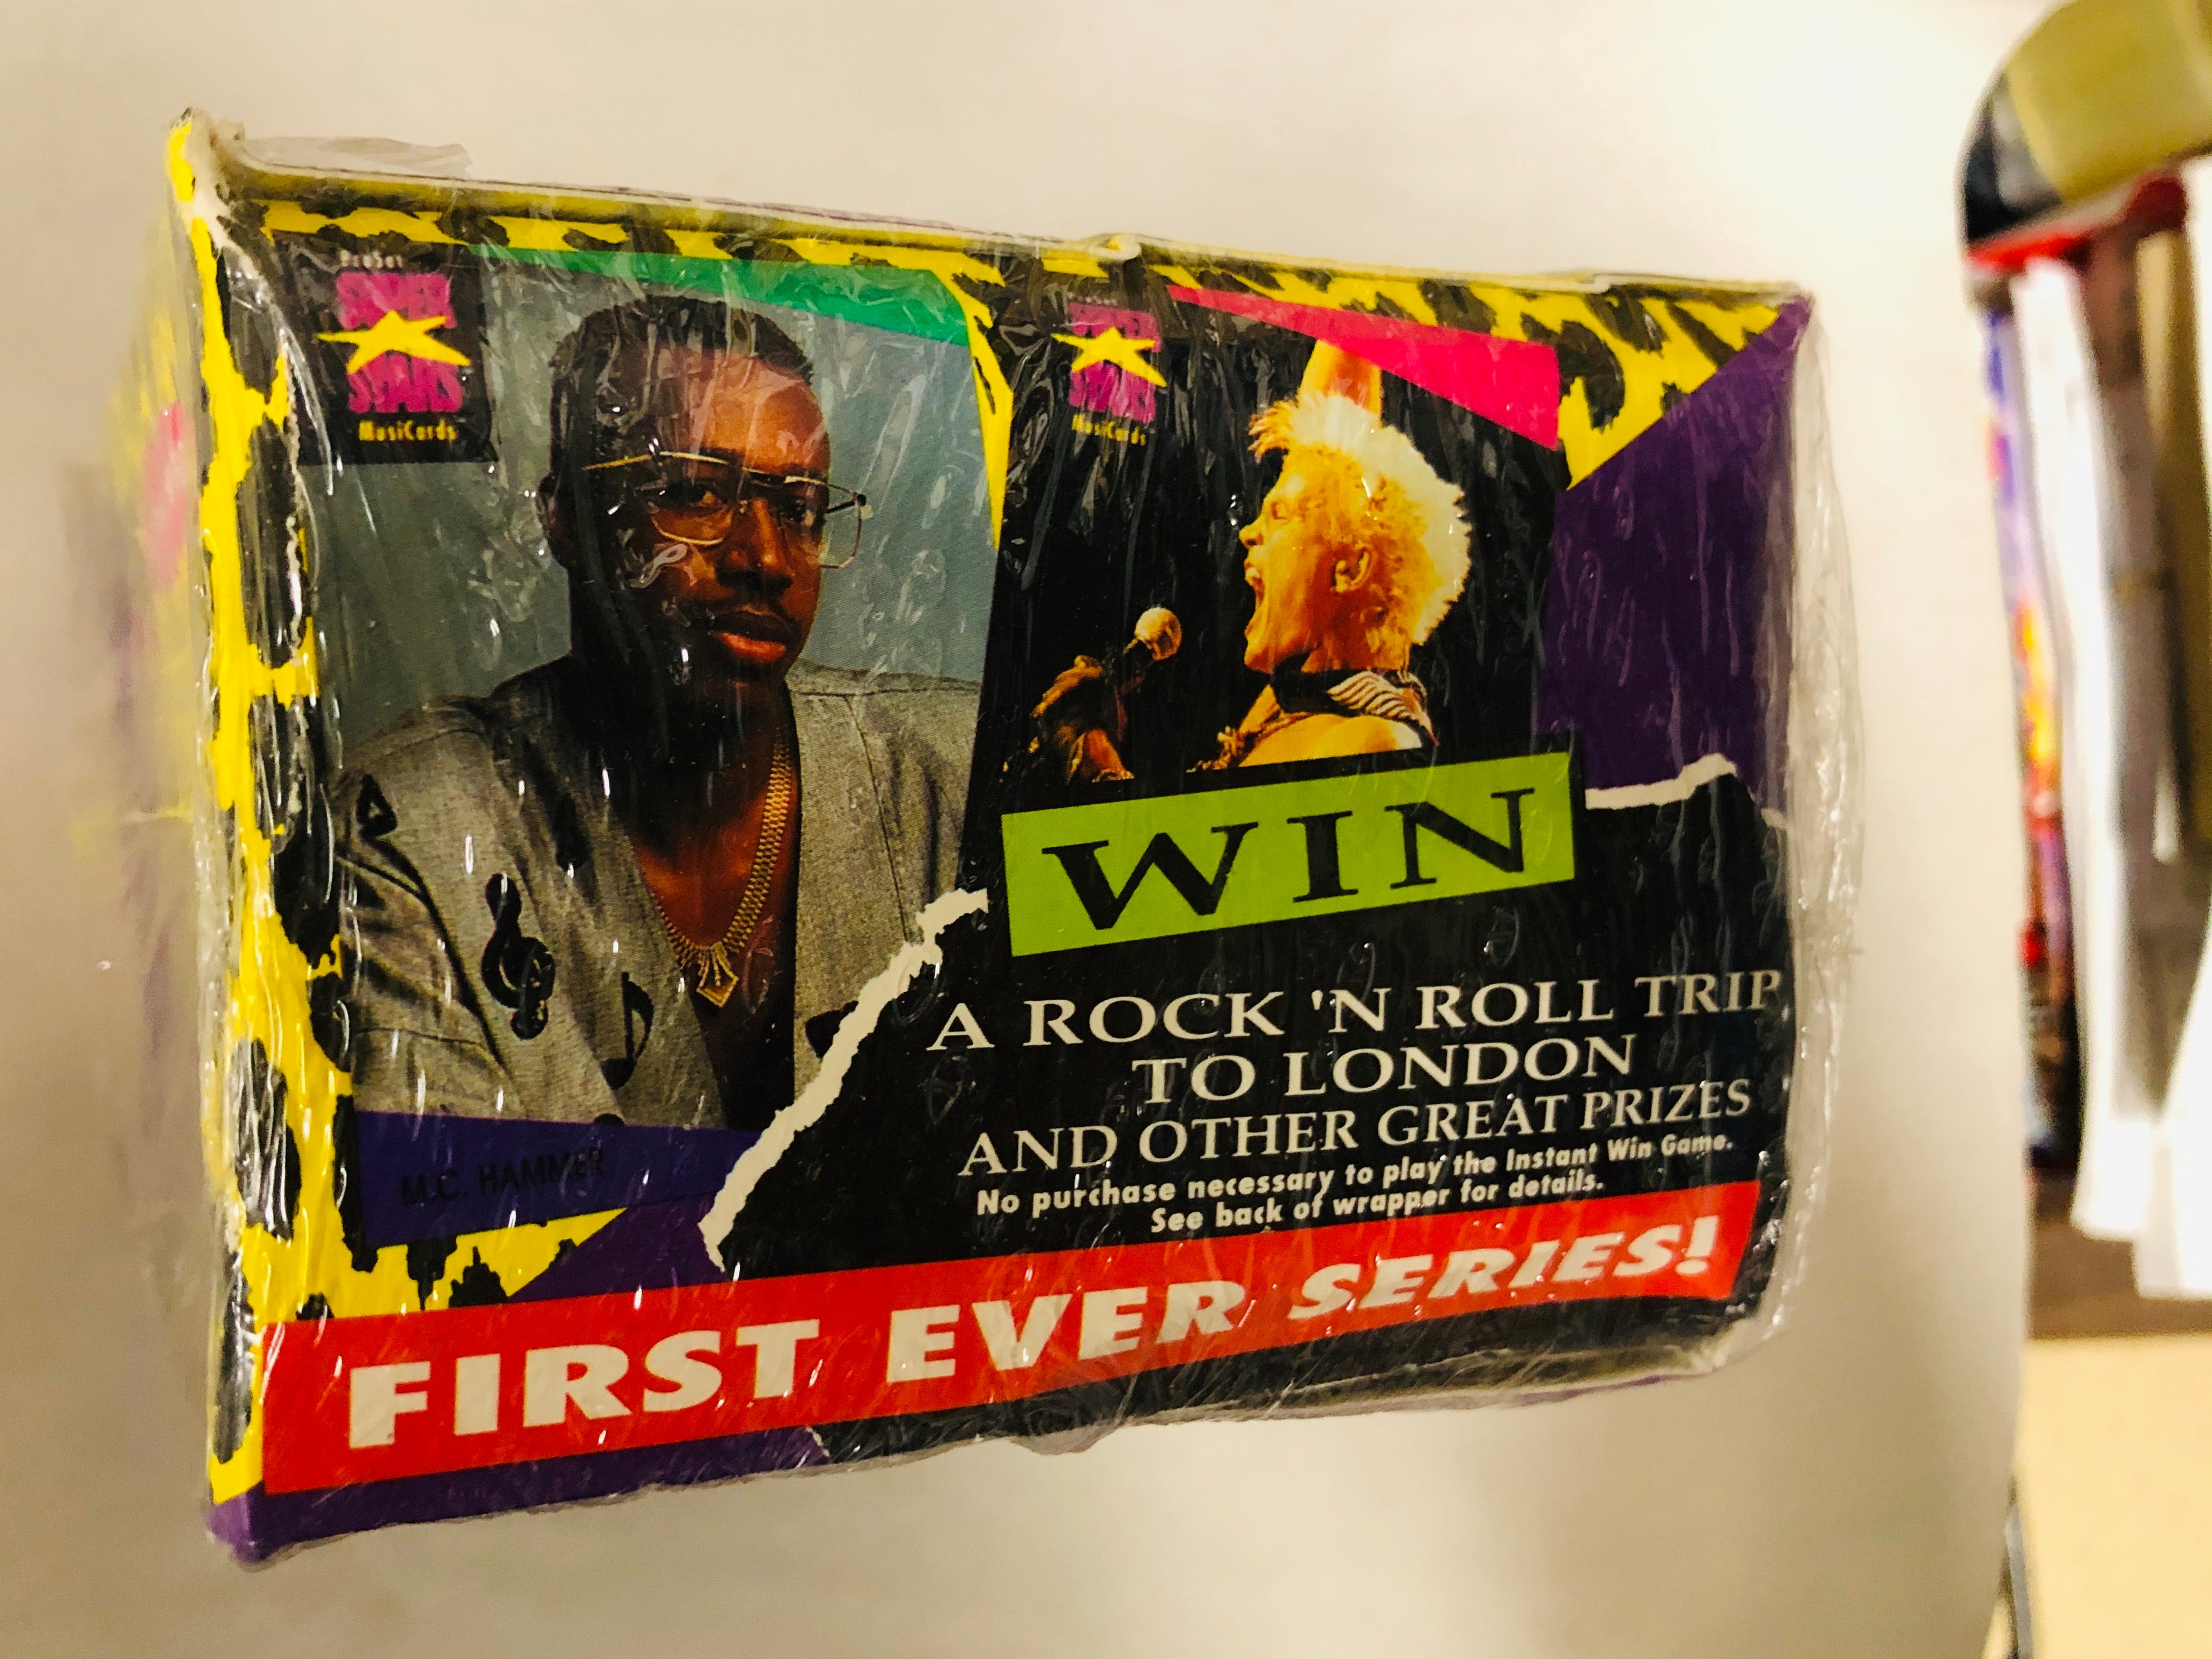 Rockstars Proset factory wrapped 36 packs cards box 1990s